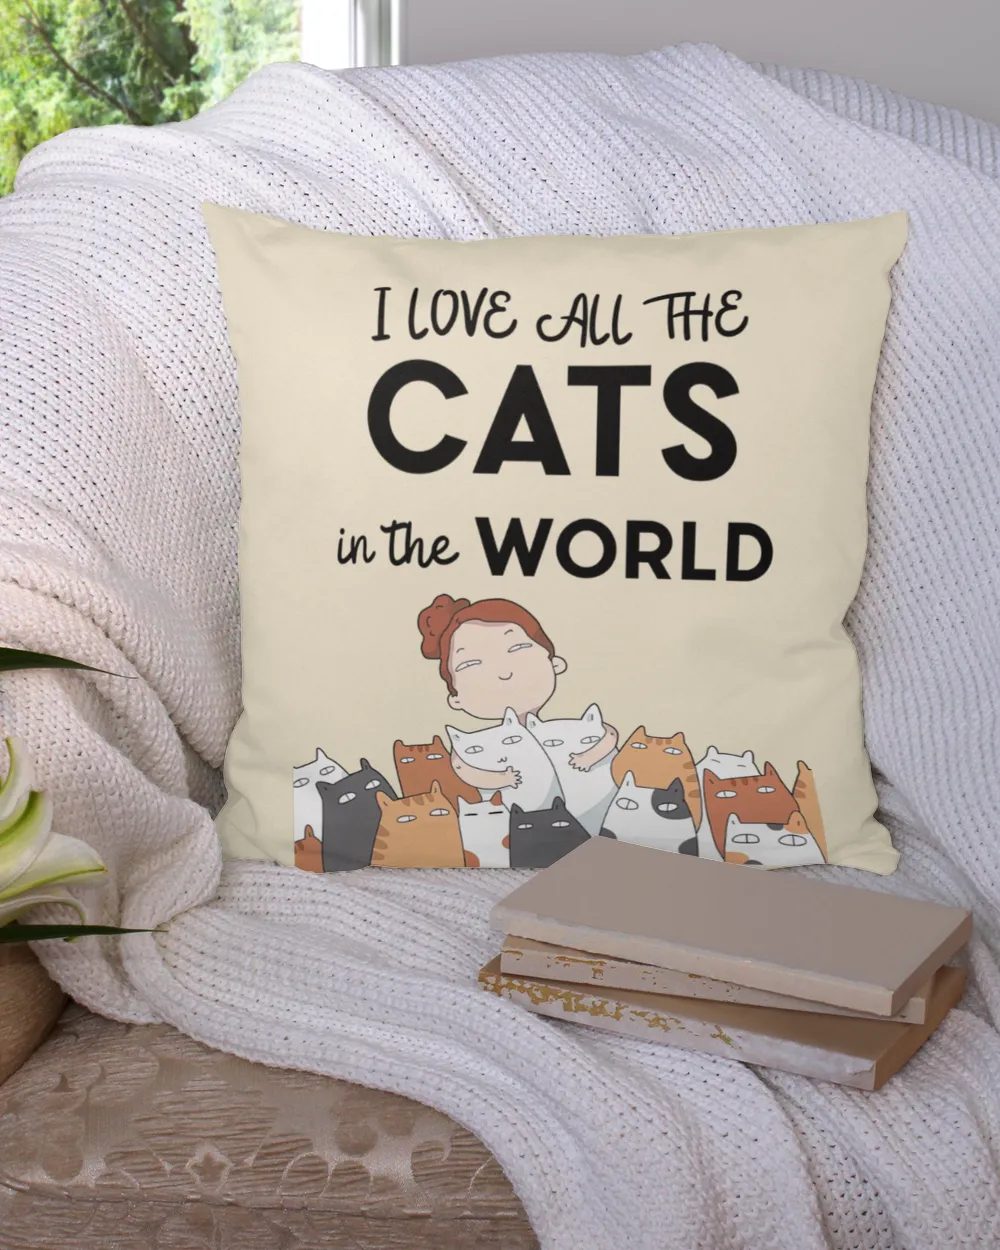 I Love All The Cats pillow QTCAT021222A10